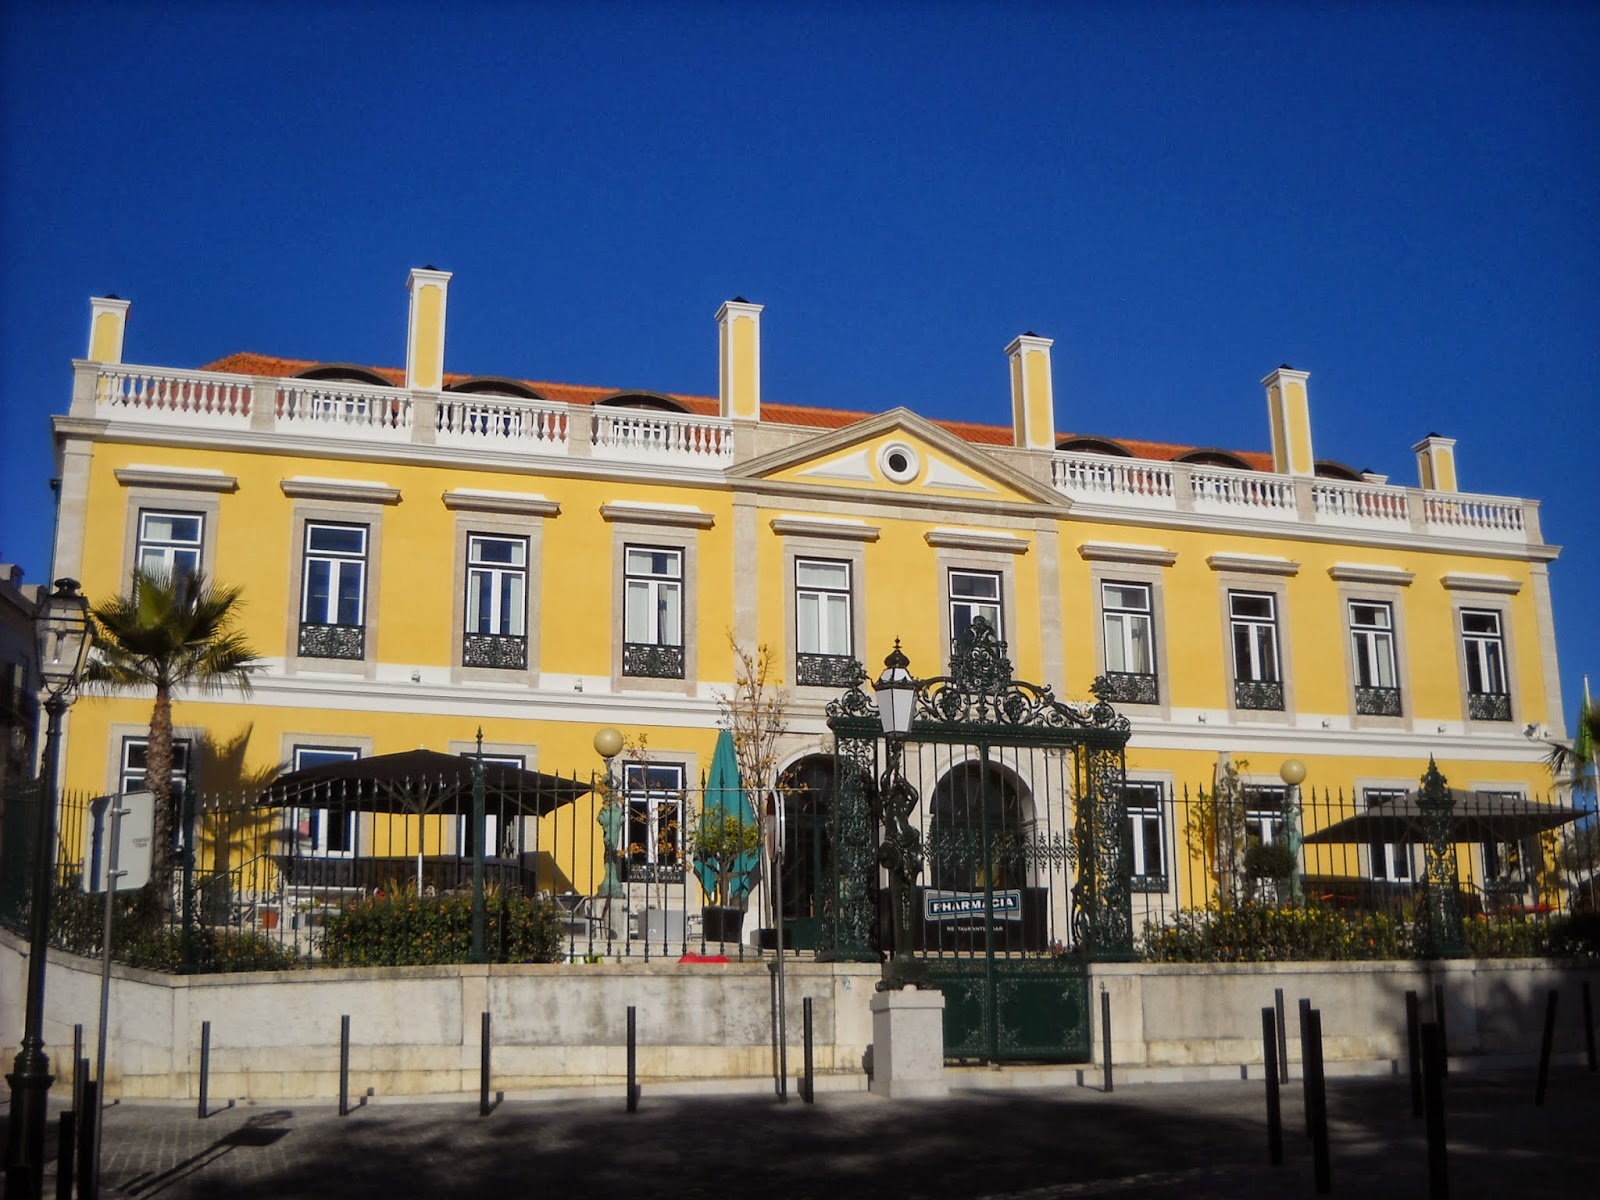 Palacete de Santa Catarina